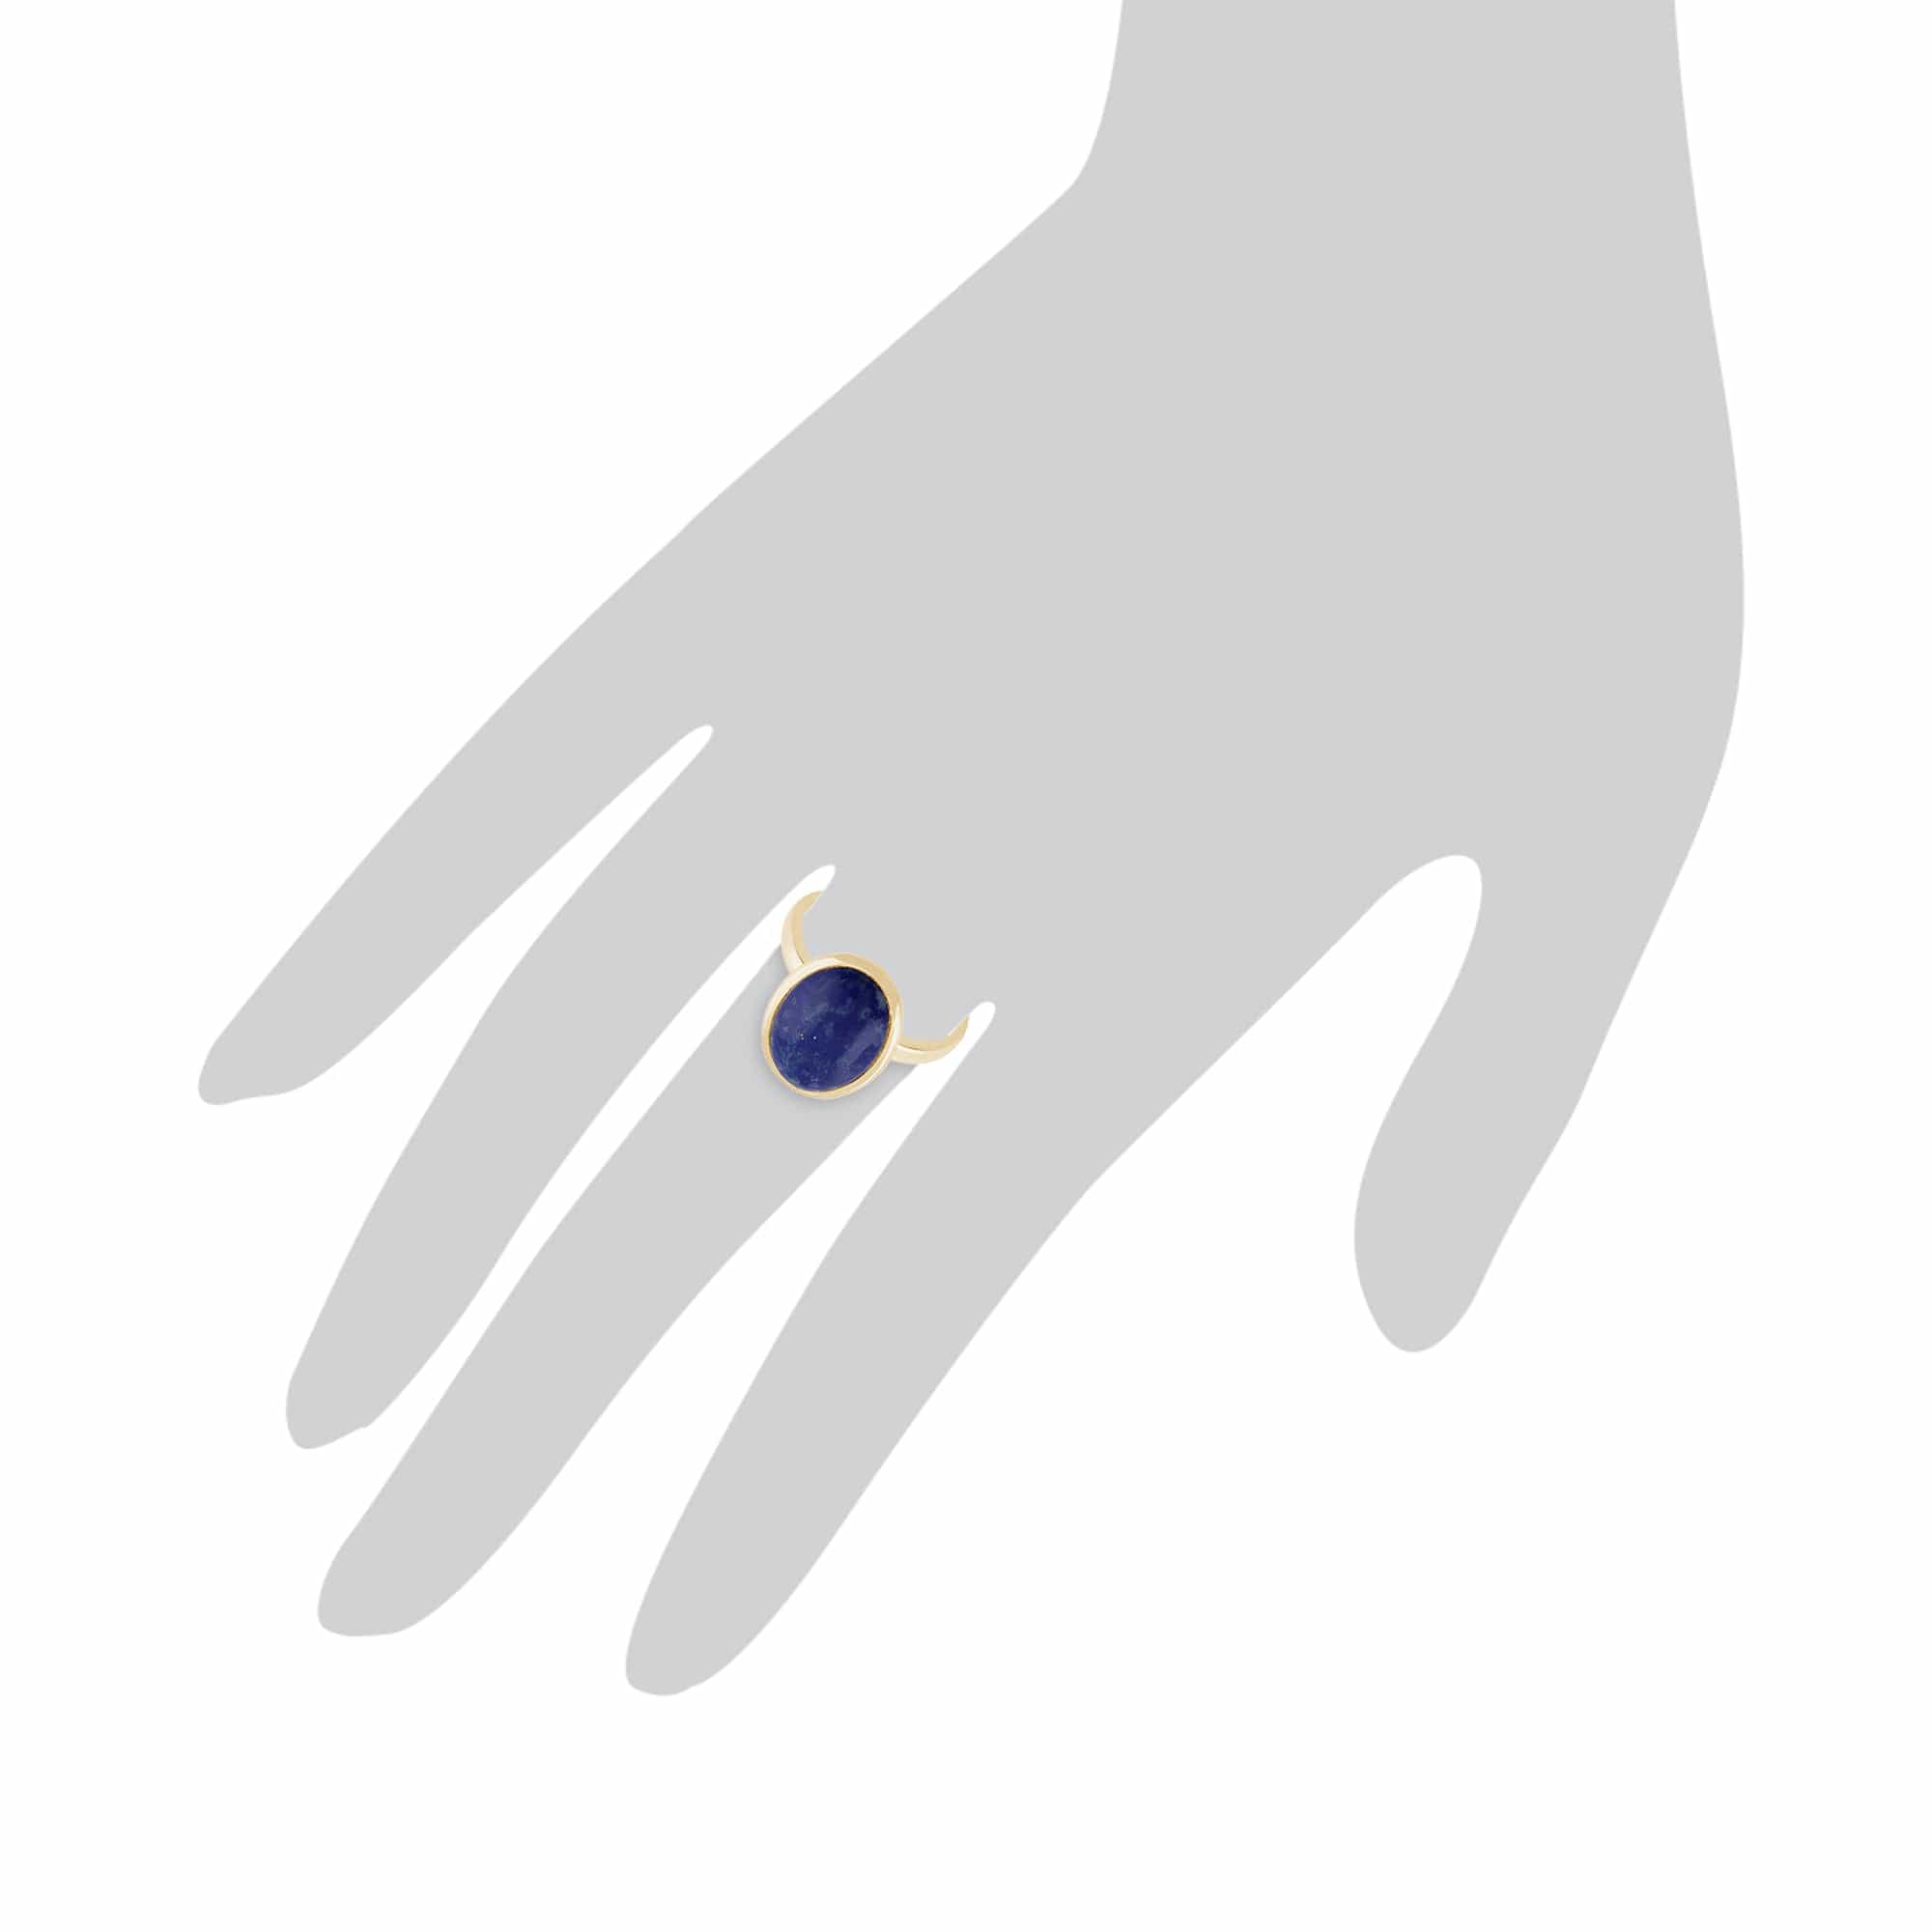 Statement Oval Lapis Lazuli Ring in 9ct Yellow Gold - Gemondo